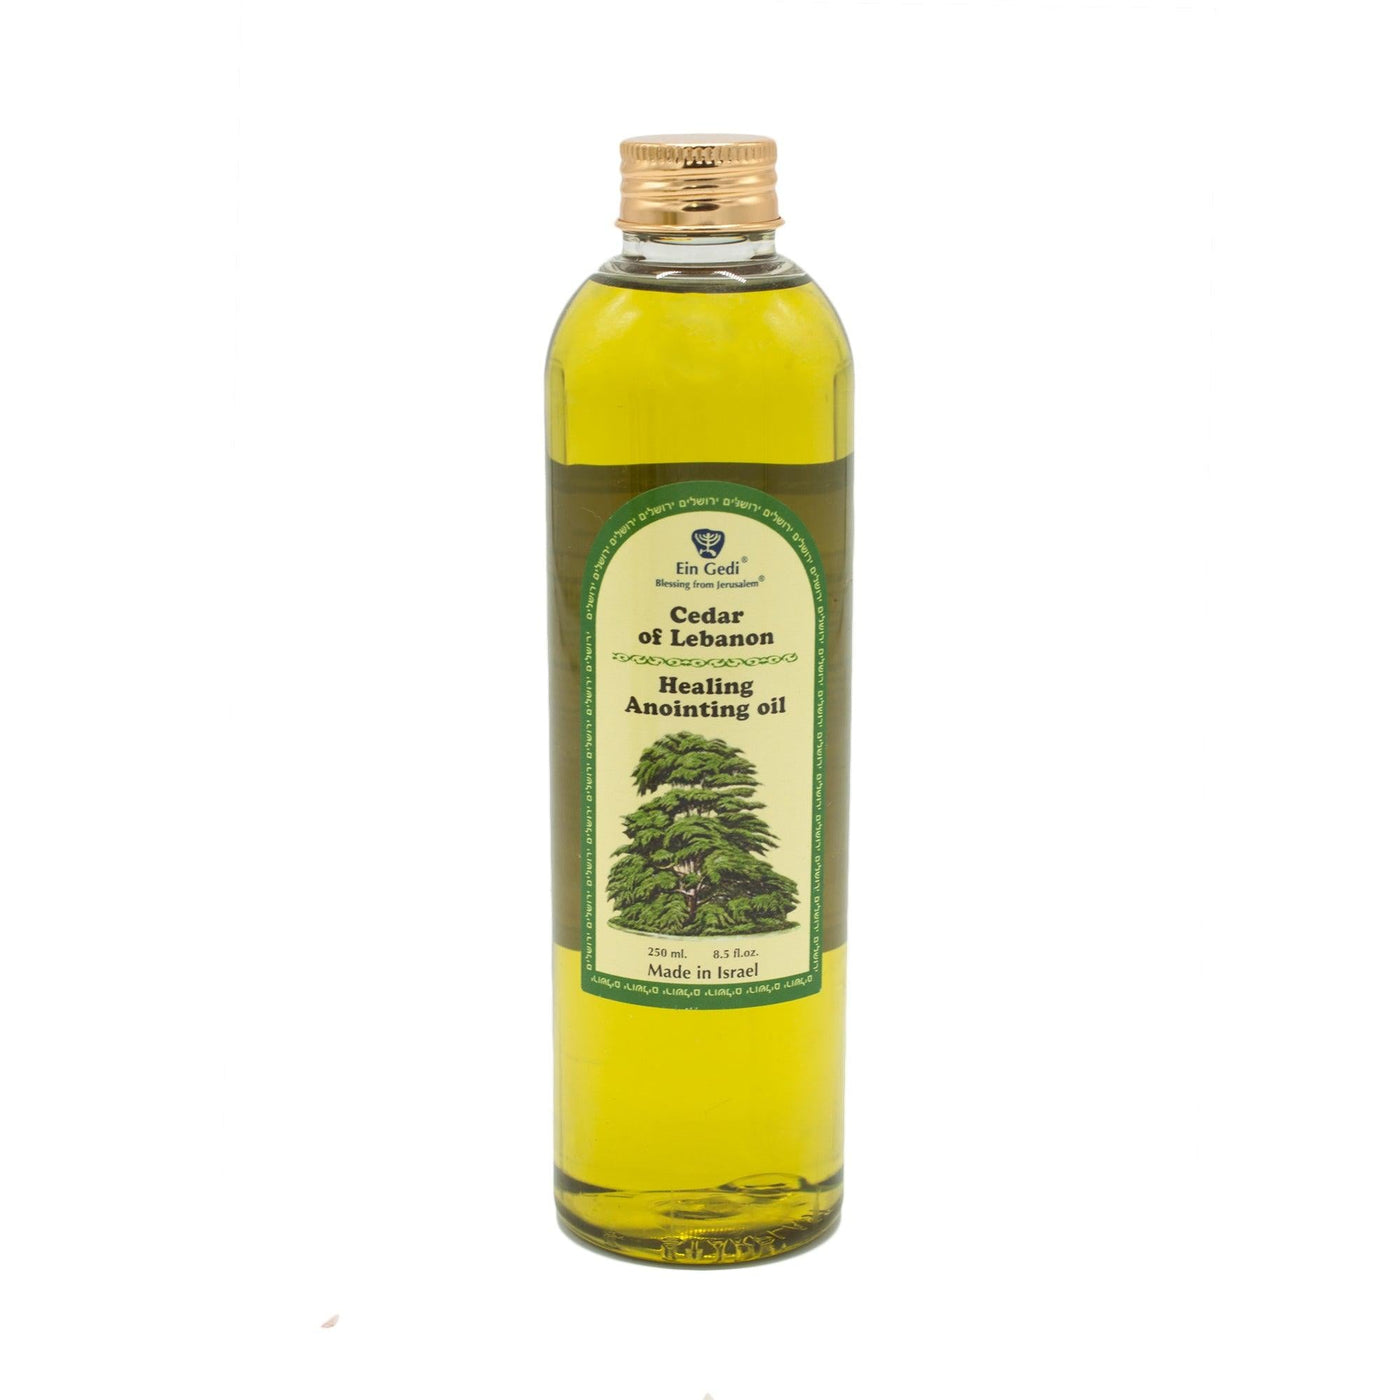 Healing Anointing Oil Cedar of Lebanon 250 ml - 8.5fl oz. From Holy land Ein Gedi - Spring Nahal